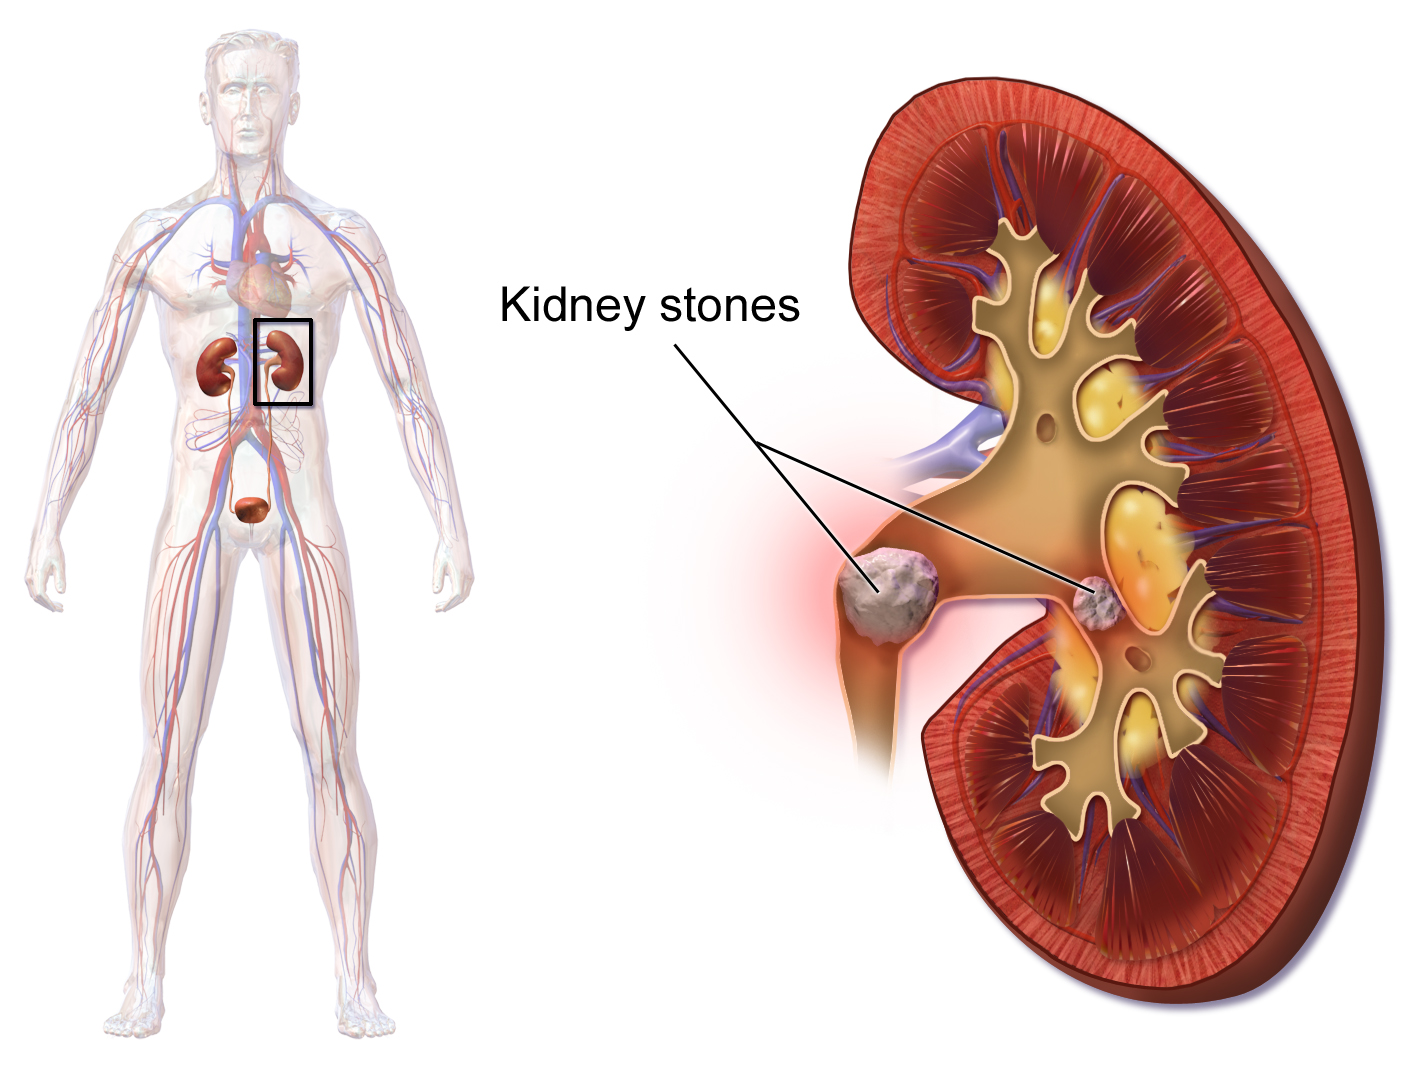 3D example kidney with kidney stones